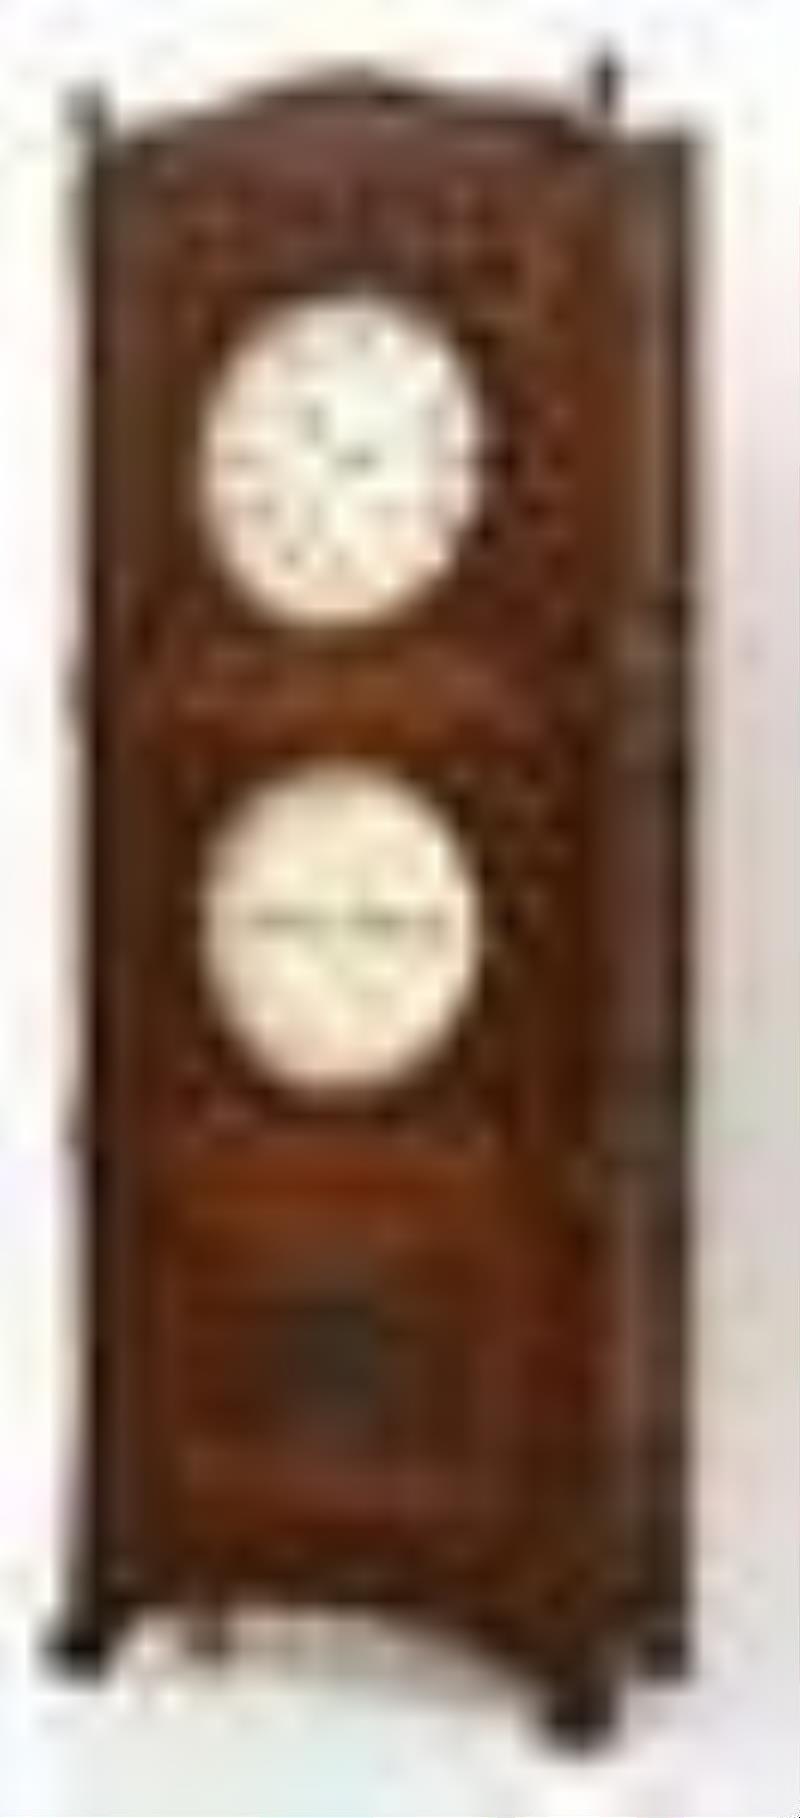 Ithaca Calendar Clock Co. "Cornell Model" Floor Clock